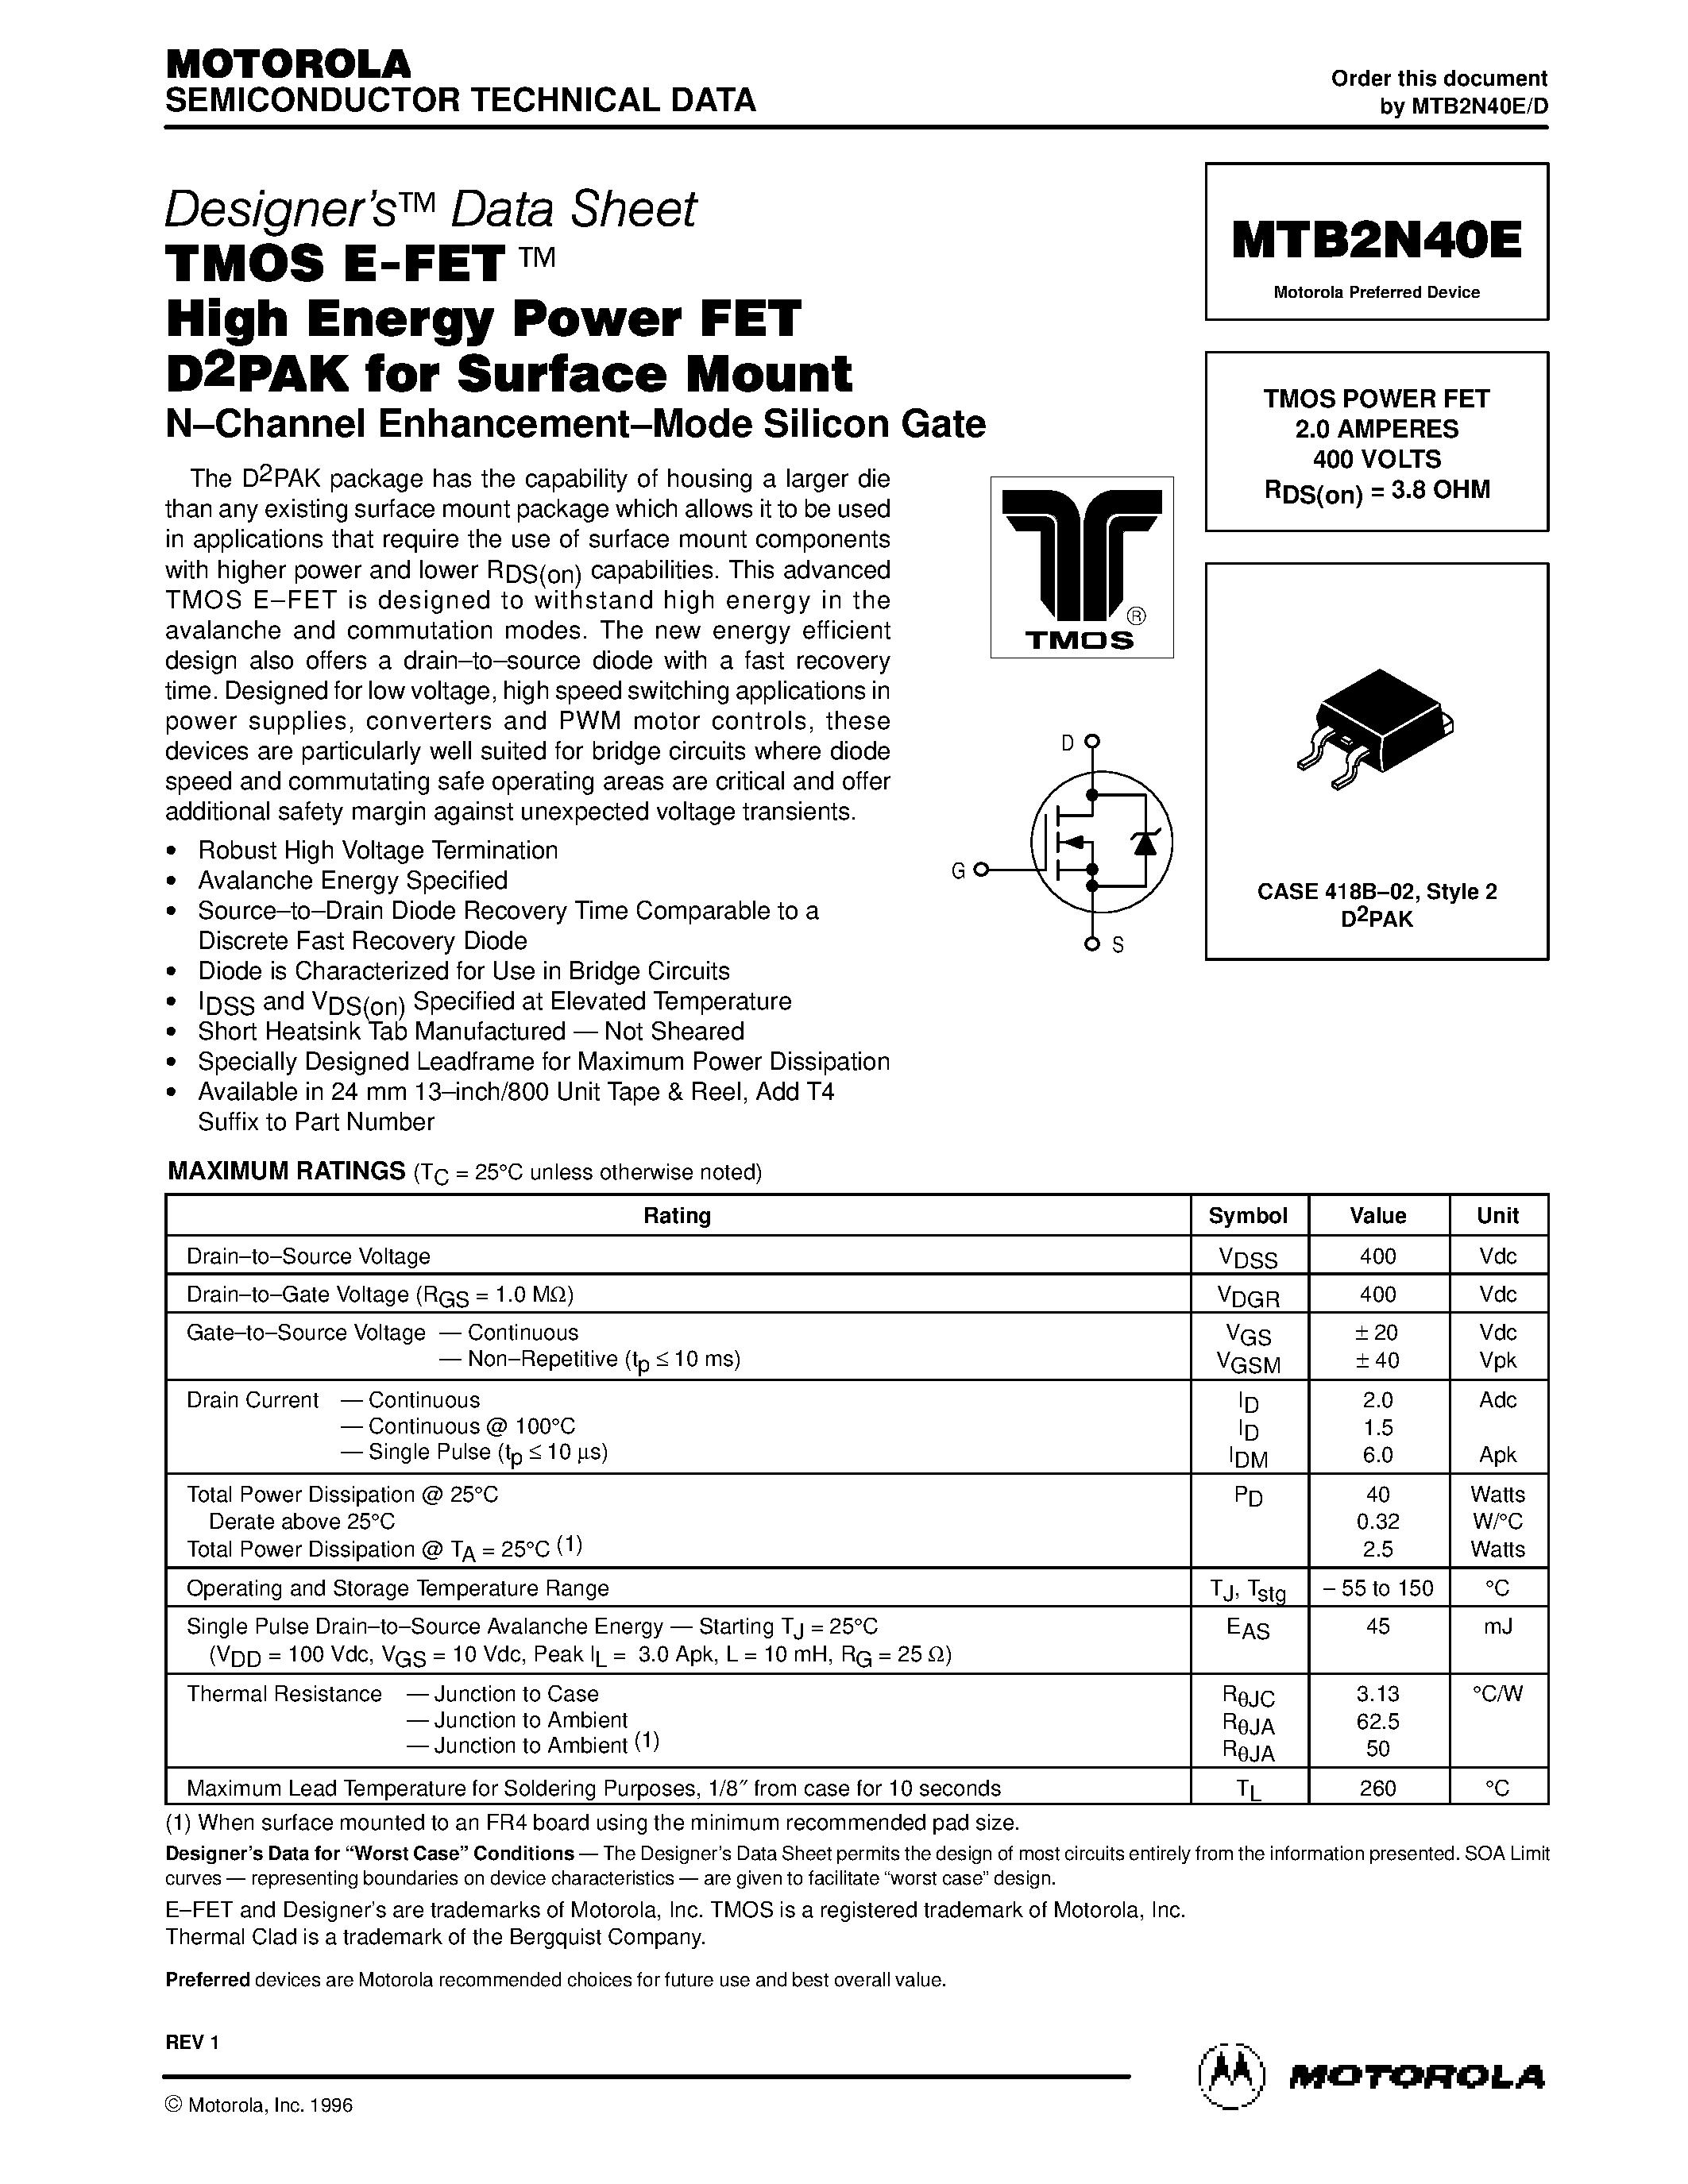 Даташит MTB2N40E - TMOS POWER FET 2.0 AMPERES 400 VOLTS страница 1